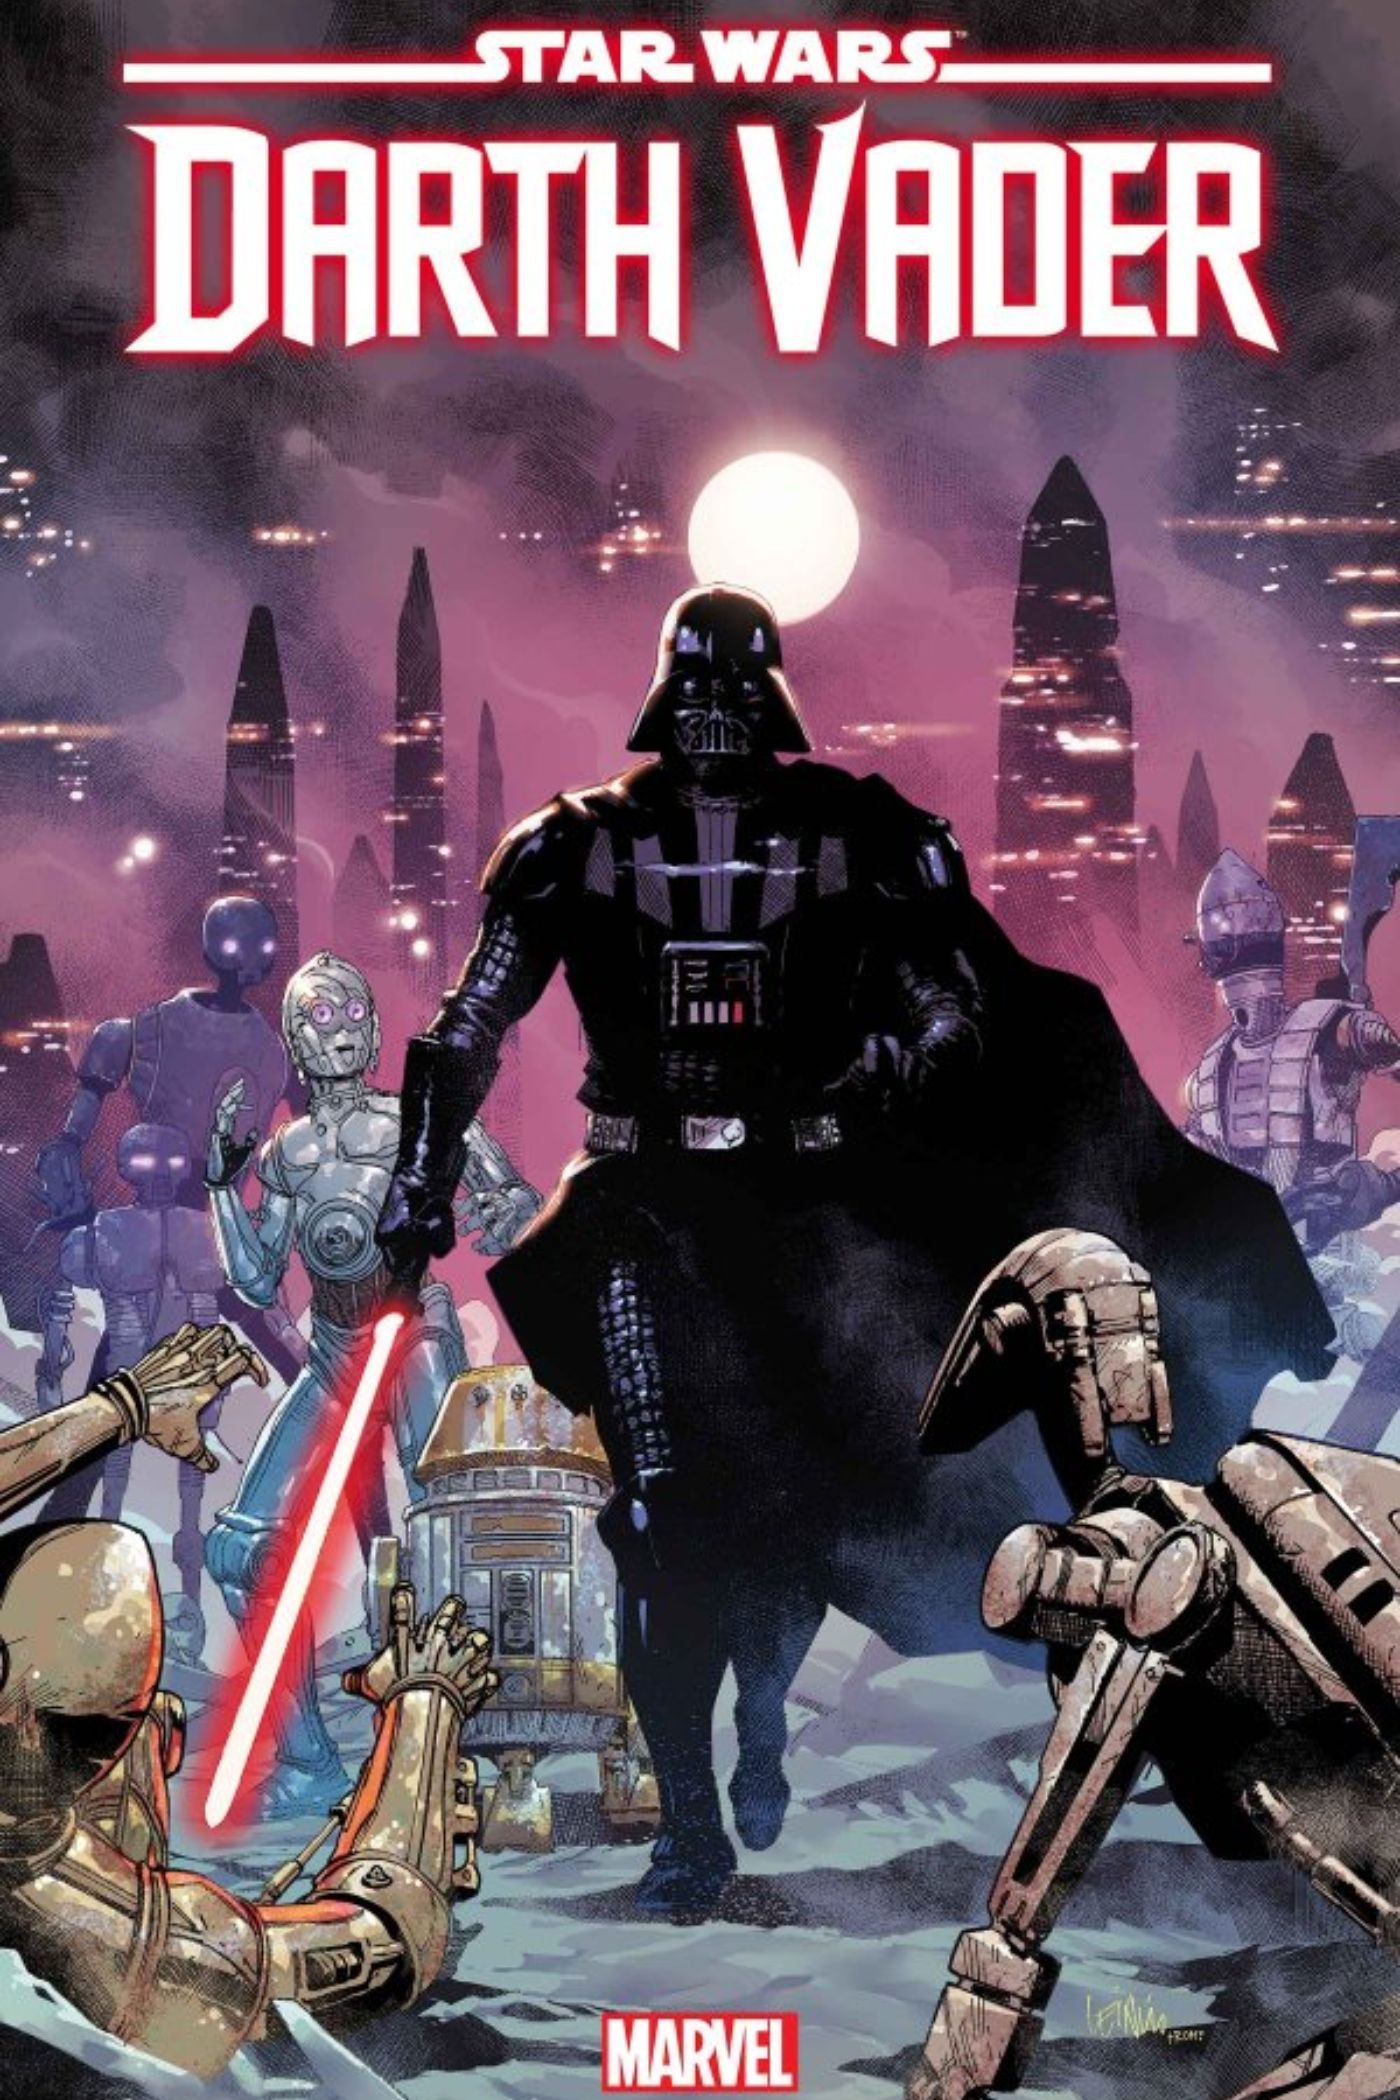 Star Wars: Darth Vader #40 cover. 